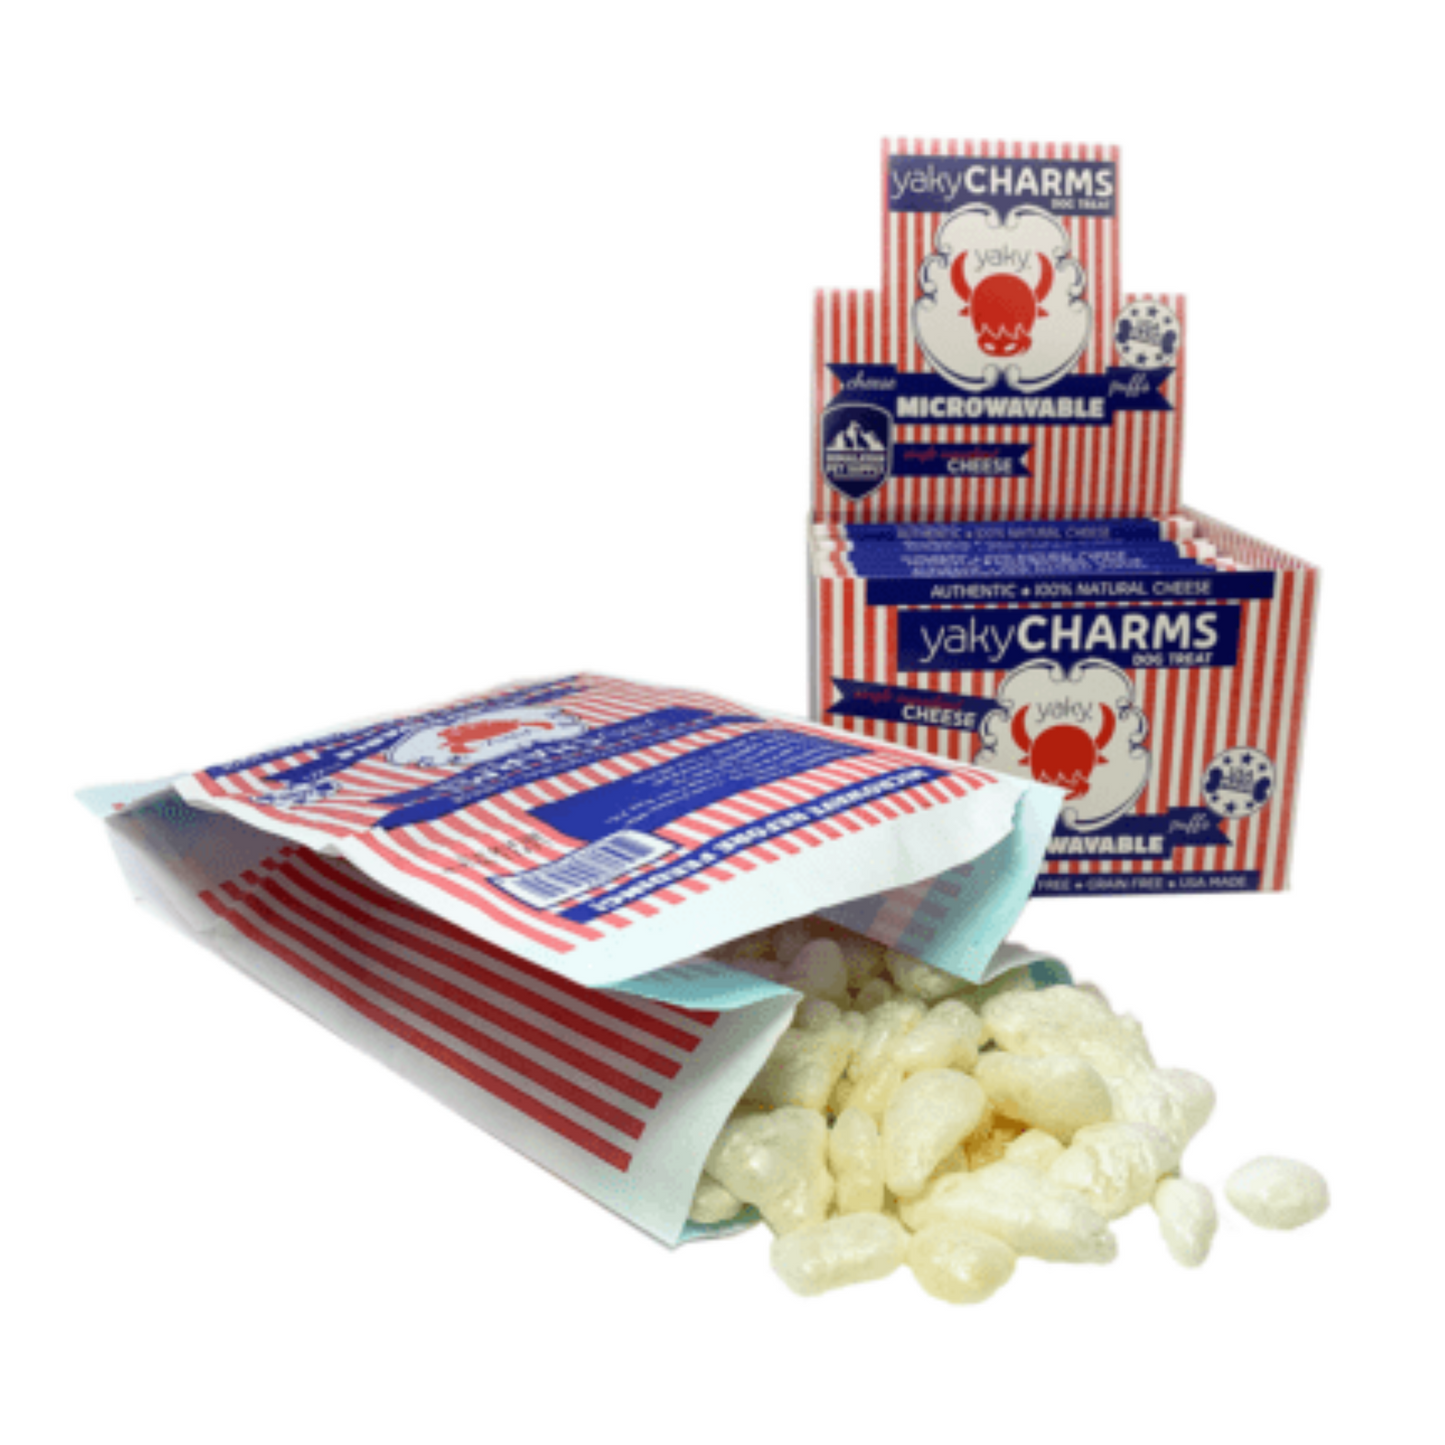 Himalayan Dog Chew Yaky Charms, Dog Popcorn Treat (1 Packet)